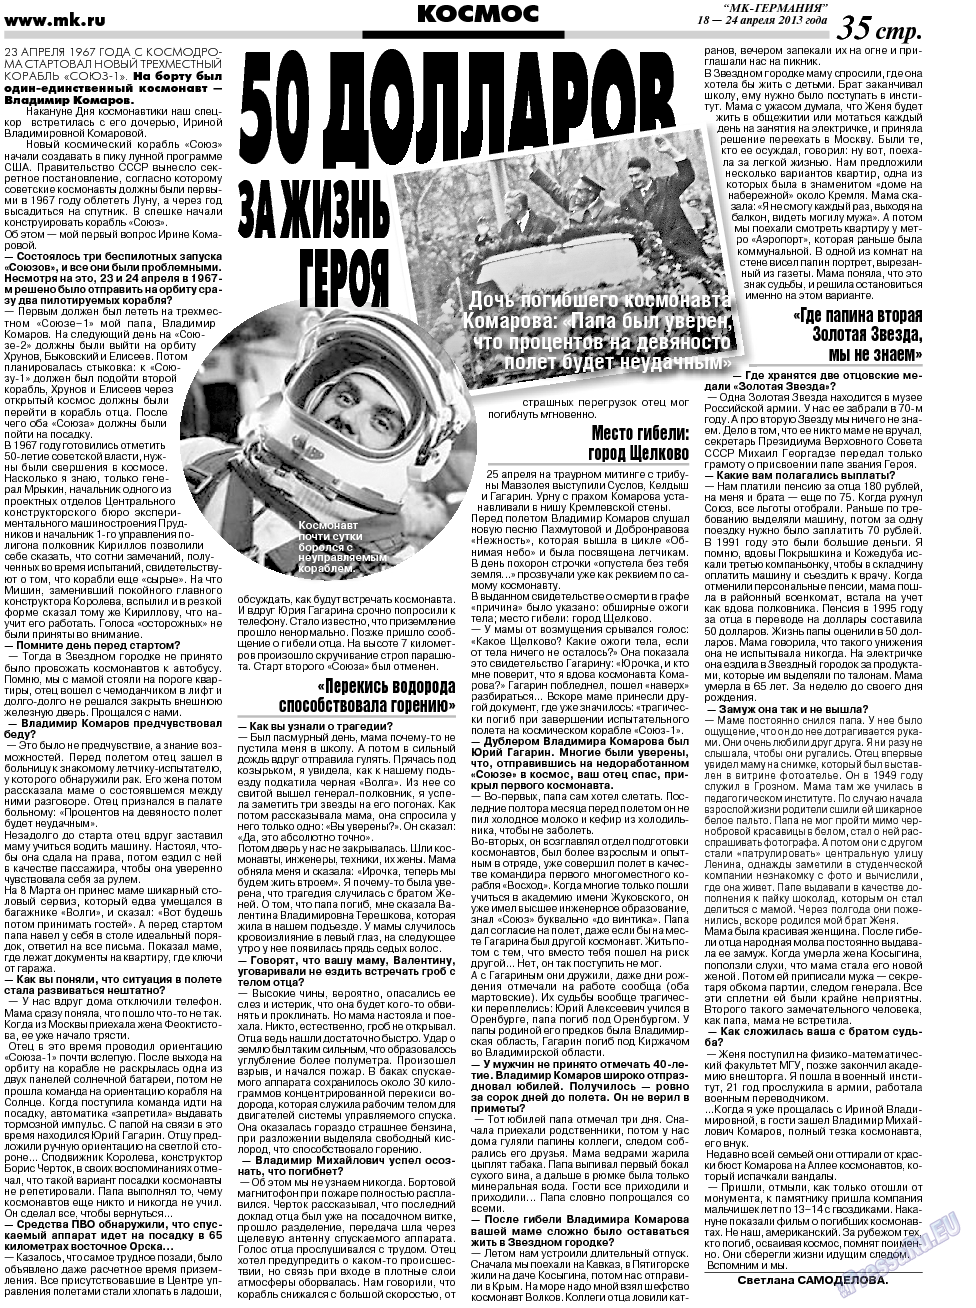 МК-Германия, газета. 2013 №16 стр.35